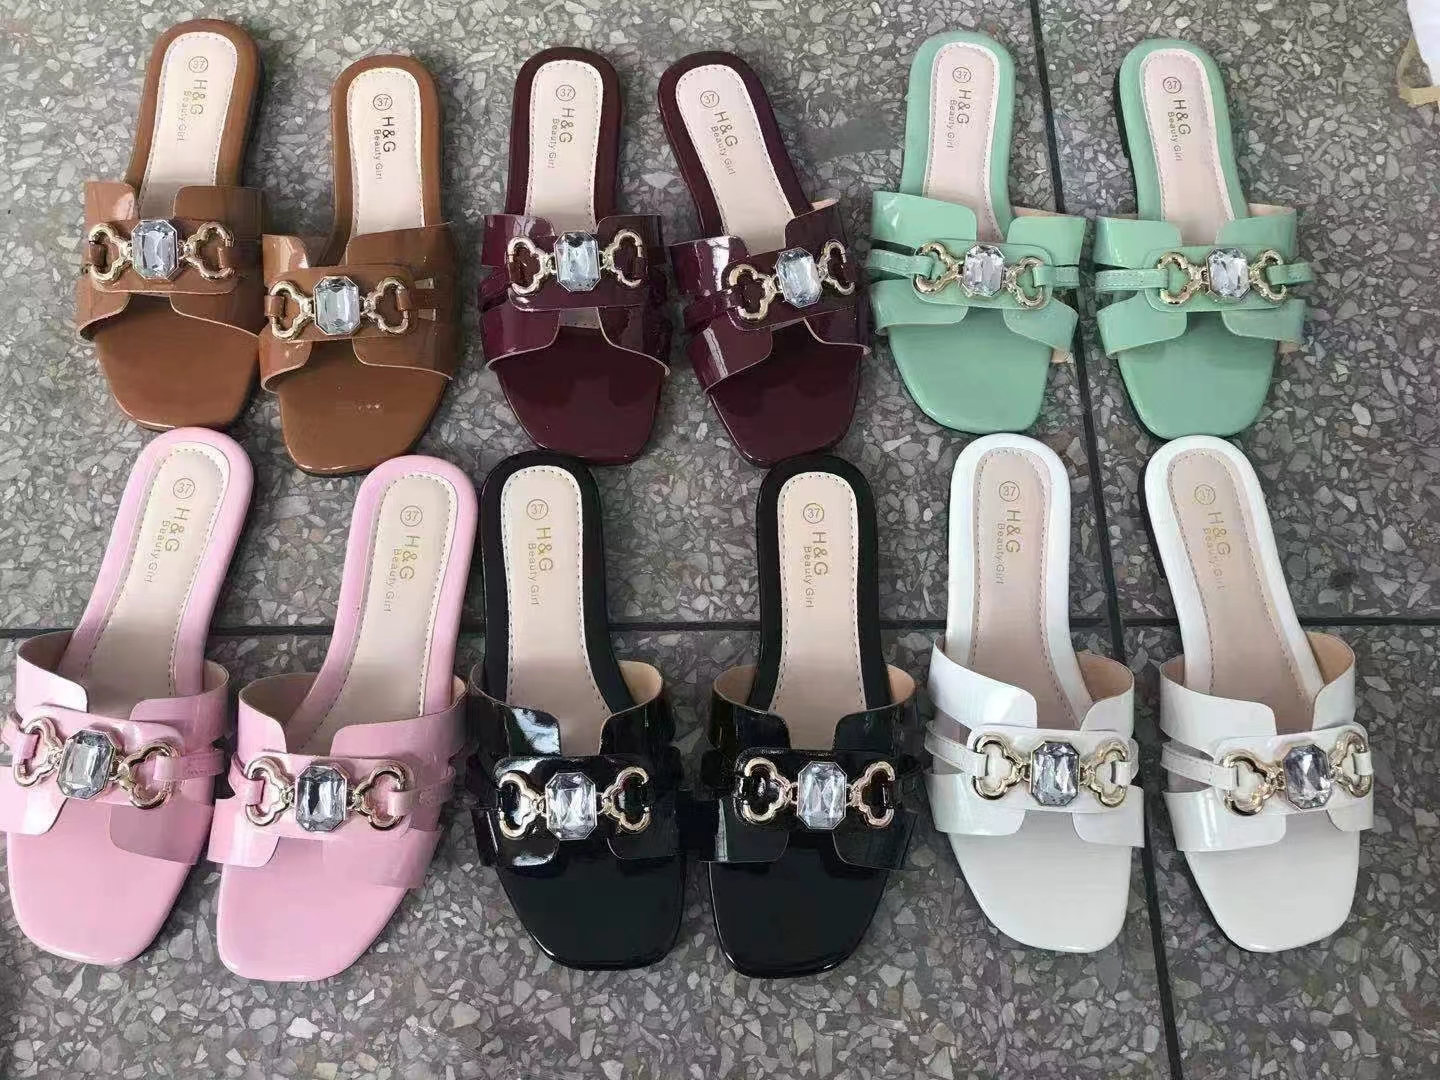 Stockpapa Stock Clothing Brand 13 Styles Ladies Sandals